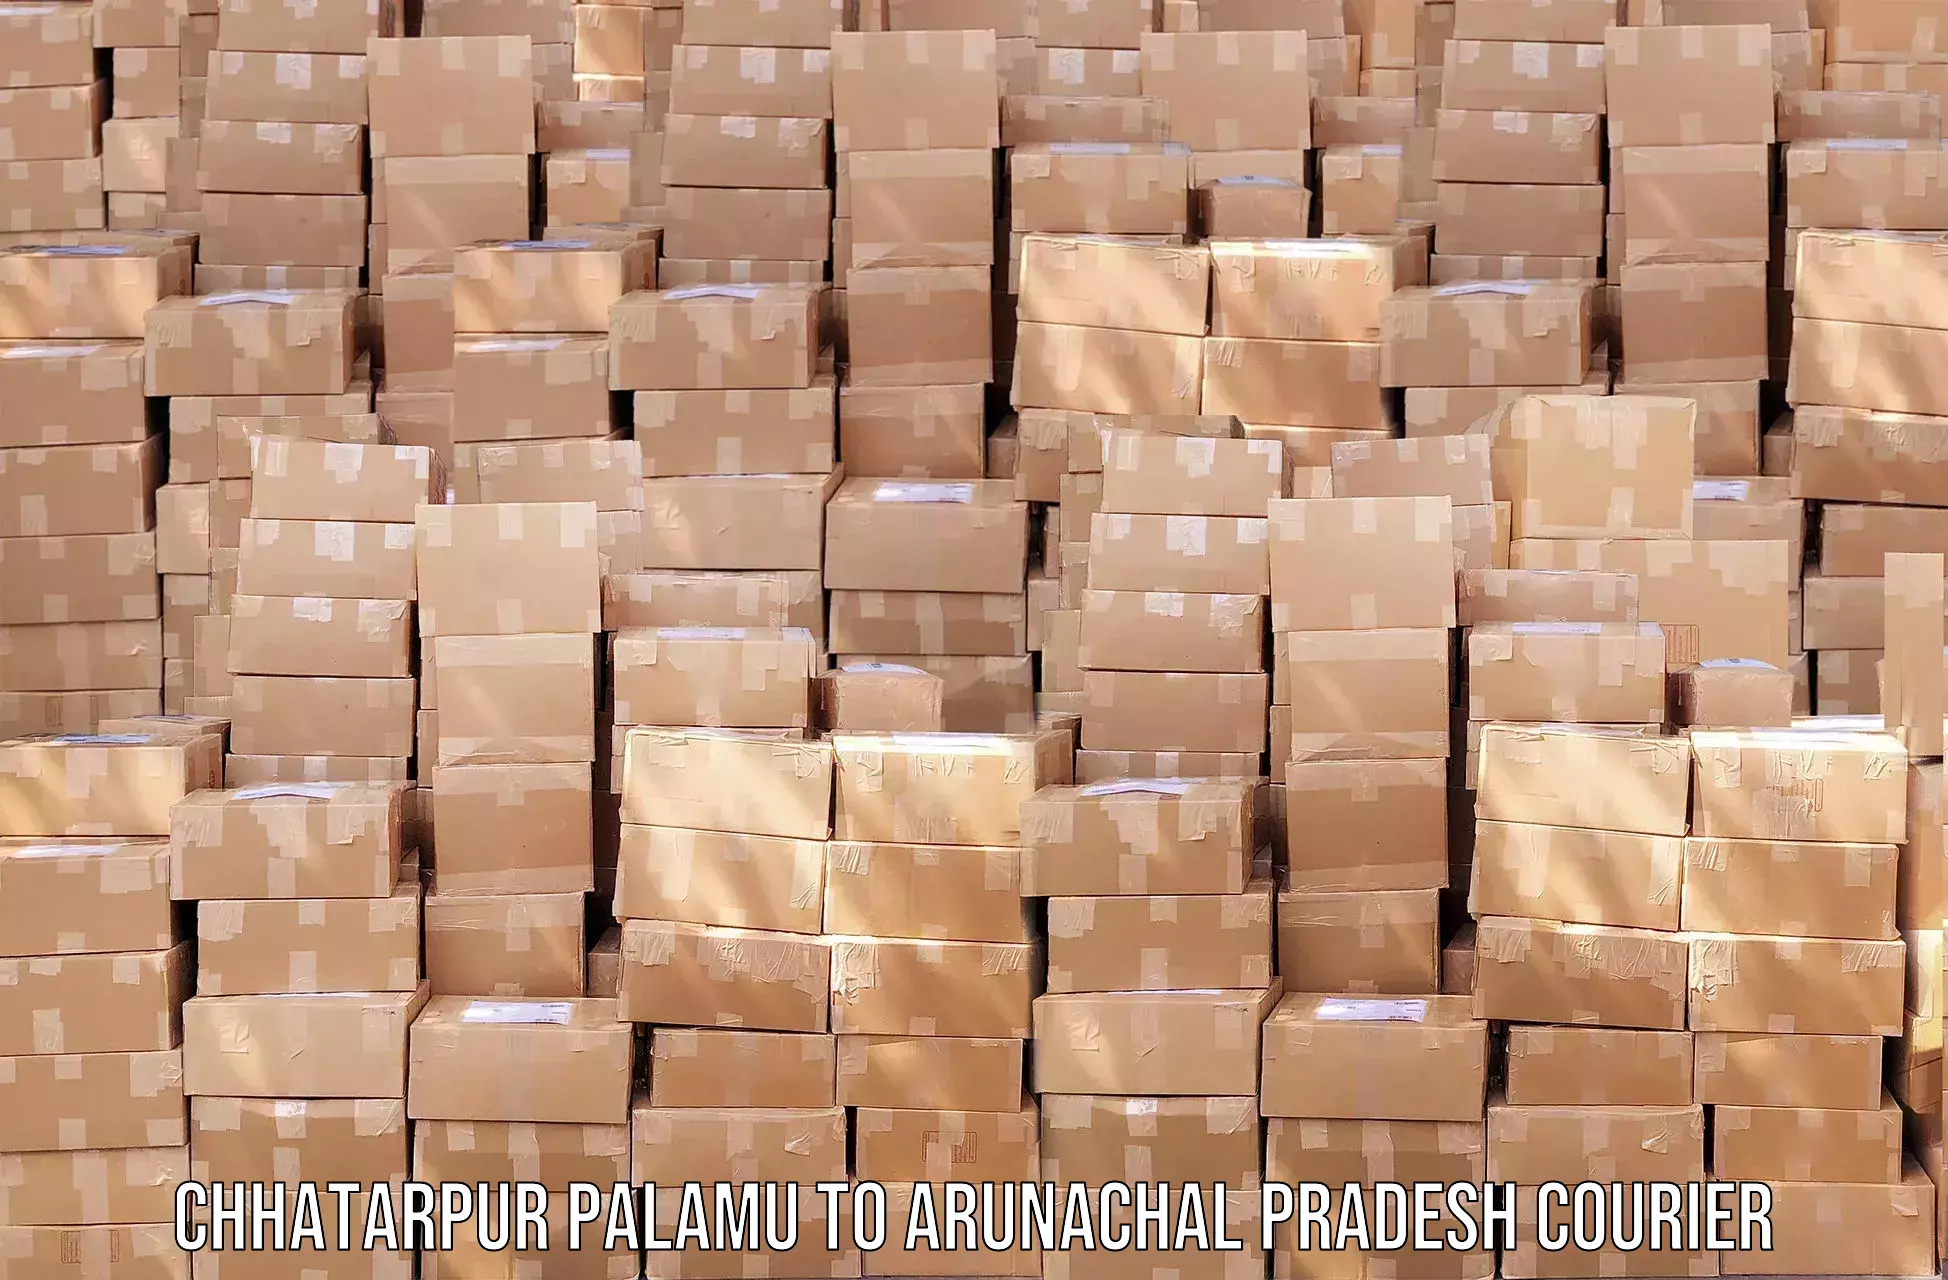 24/7 courier service Chhatarpur Palamu to Namsai